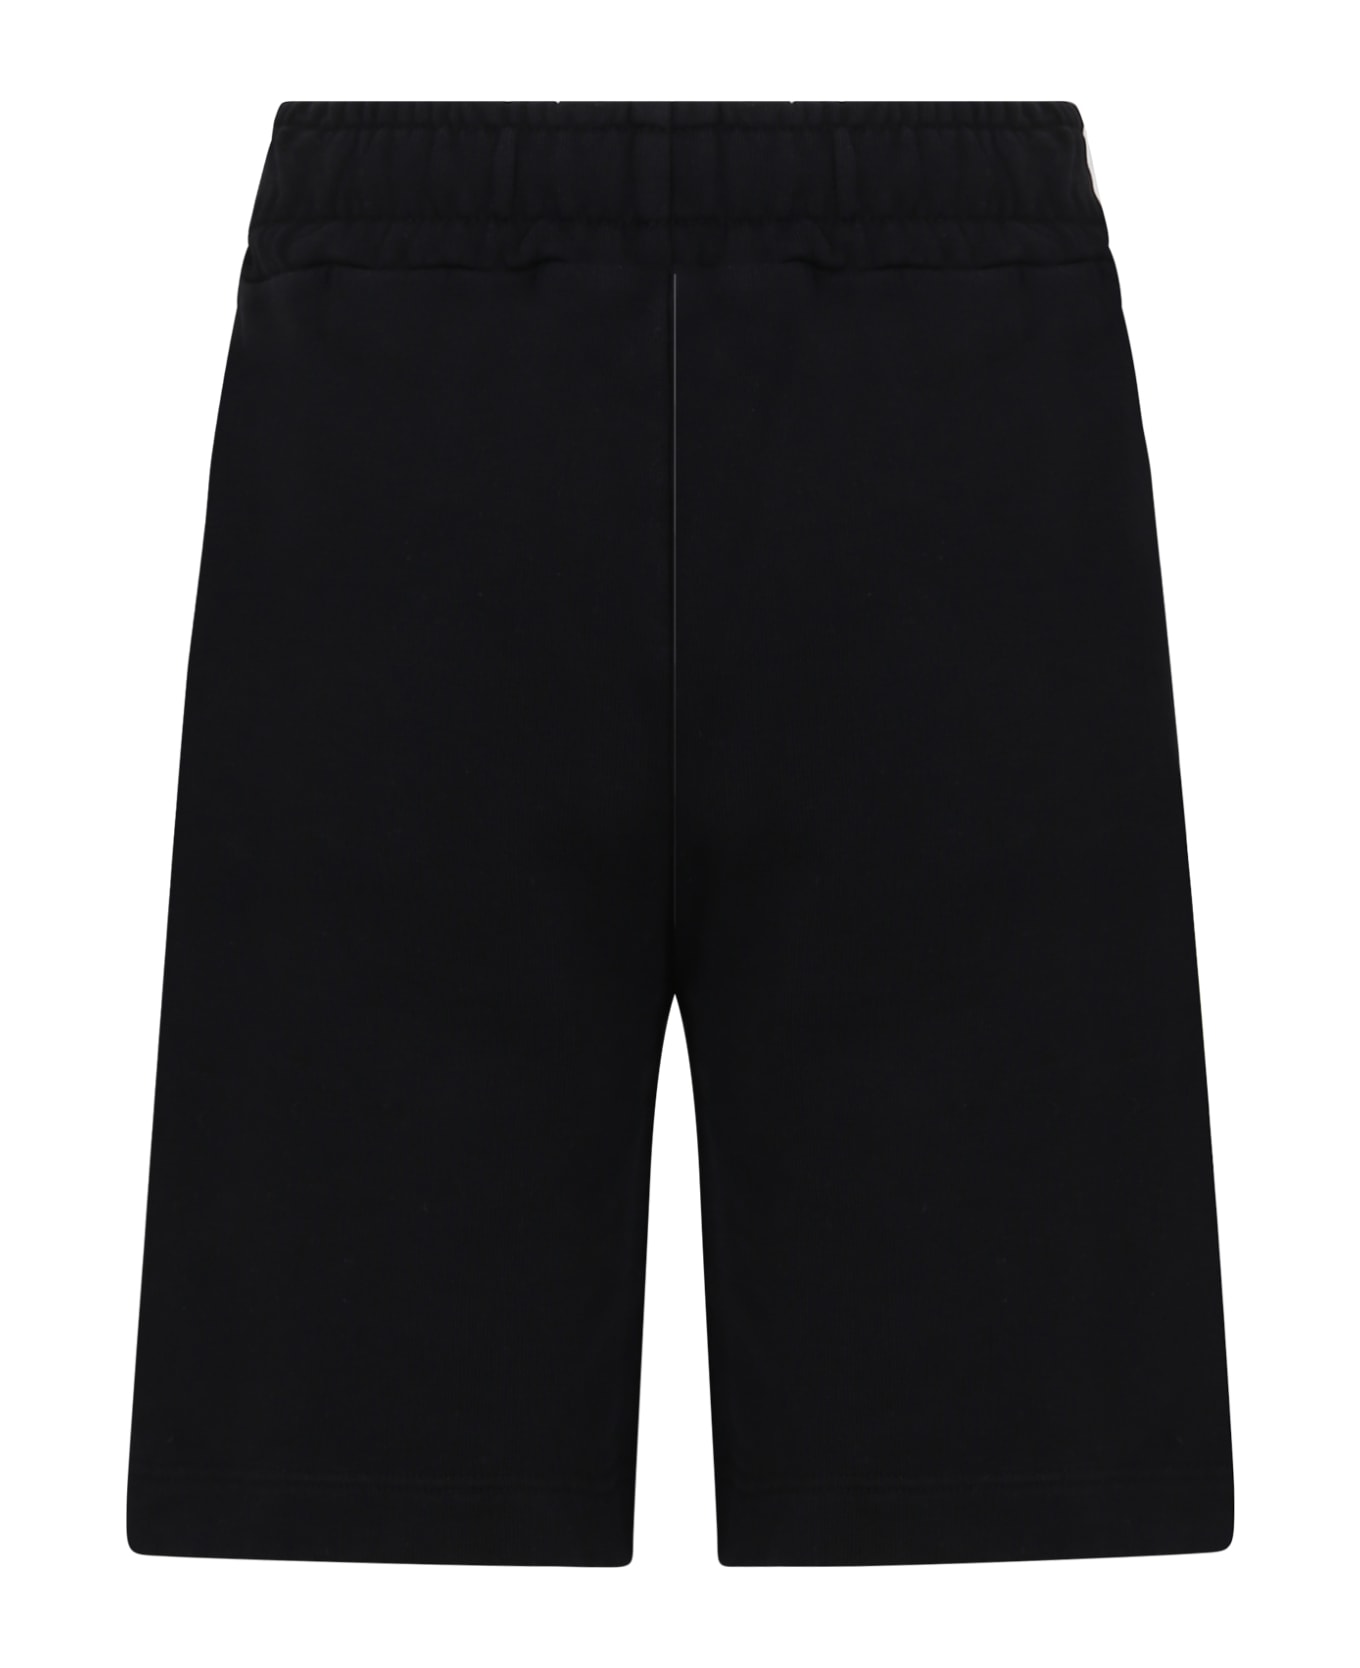 Barrow Black Shorts For Boy With Logo - Black